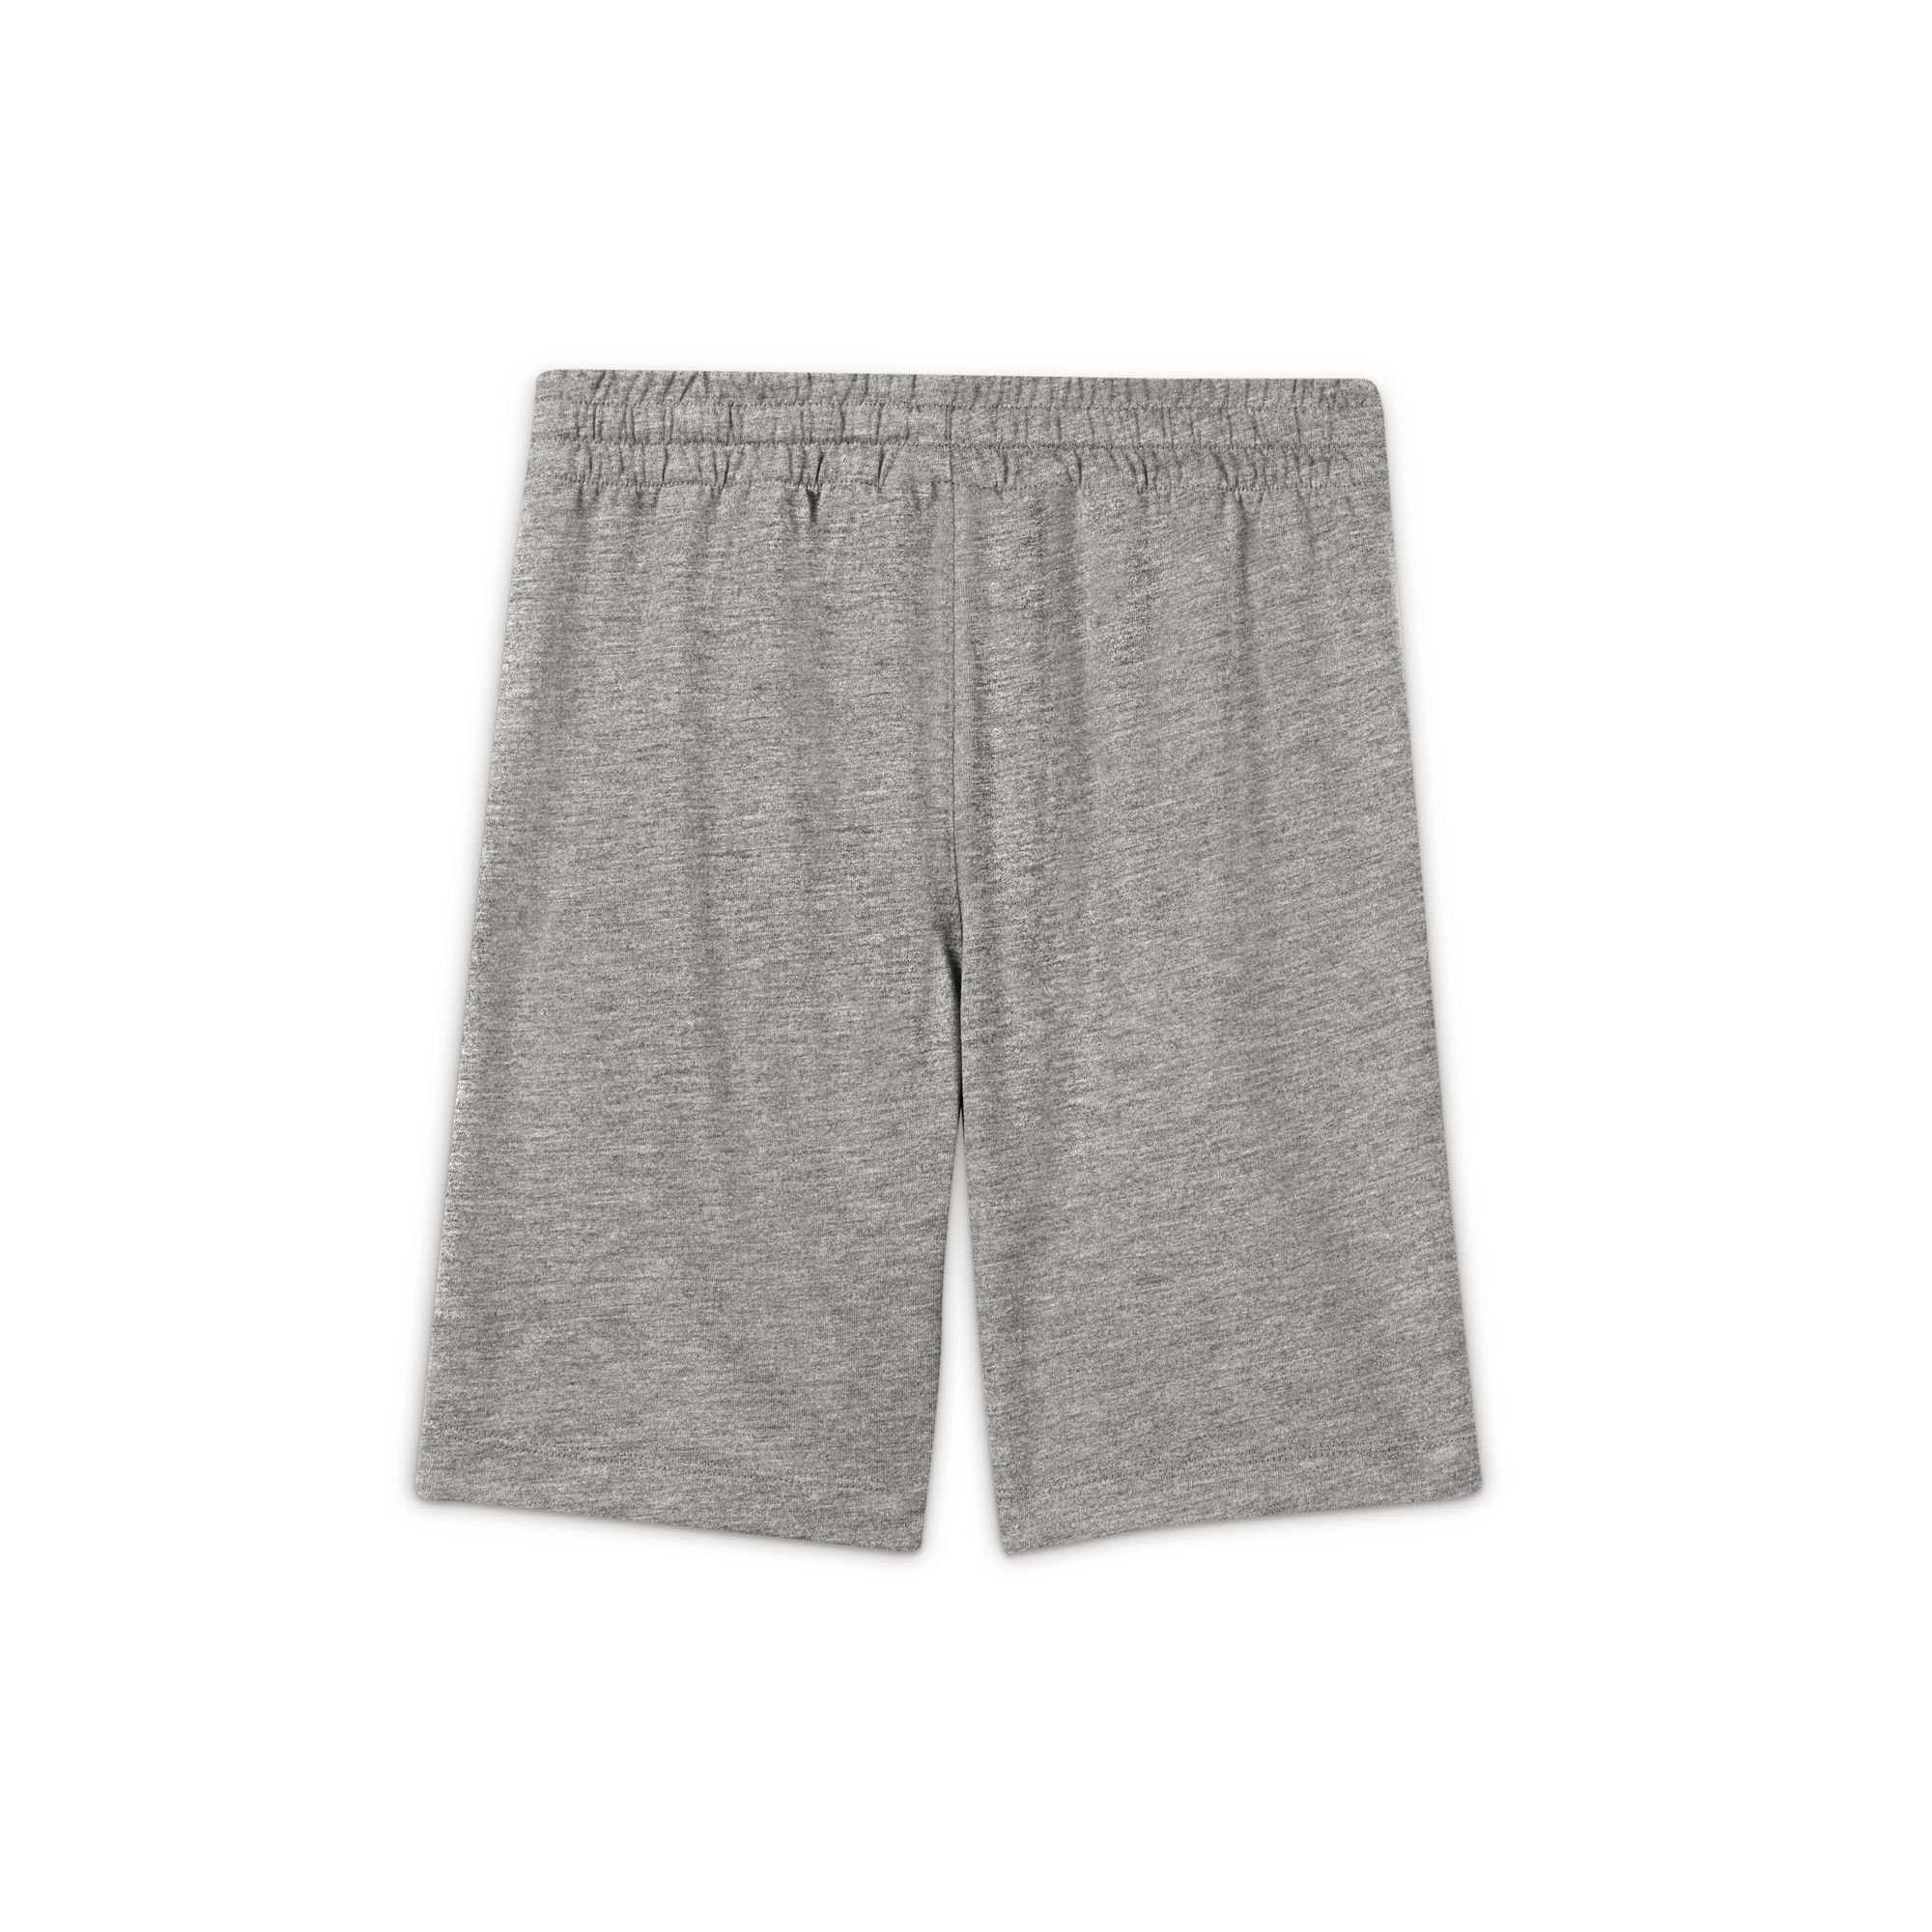 JERSEY BIG grau Shorts Sportswear (BOYS) SHORTS Nike KIDS'